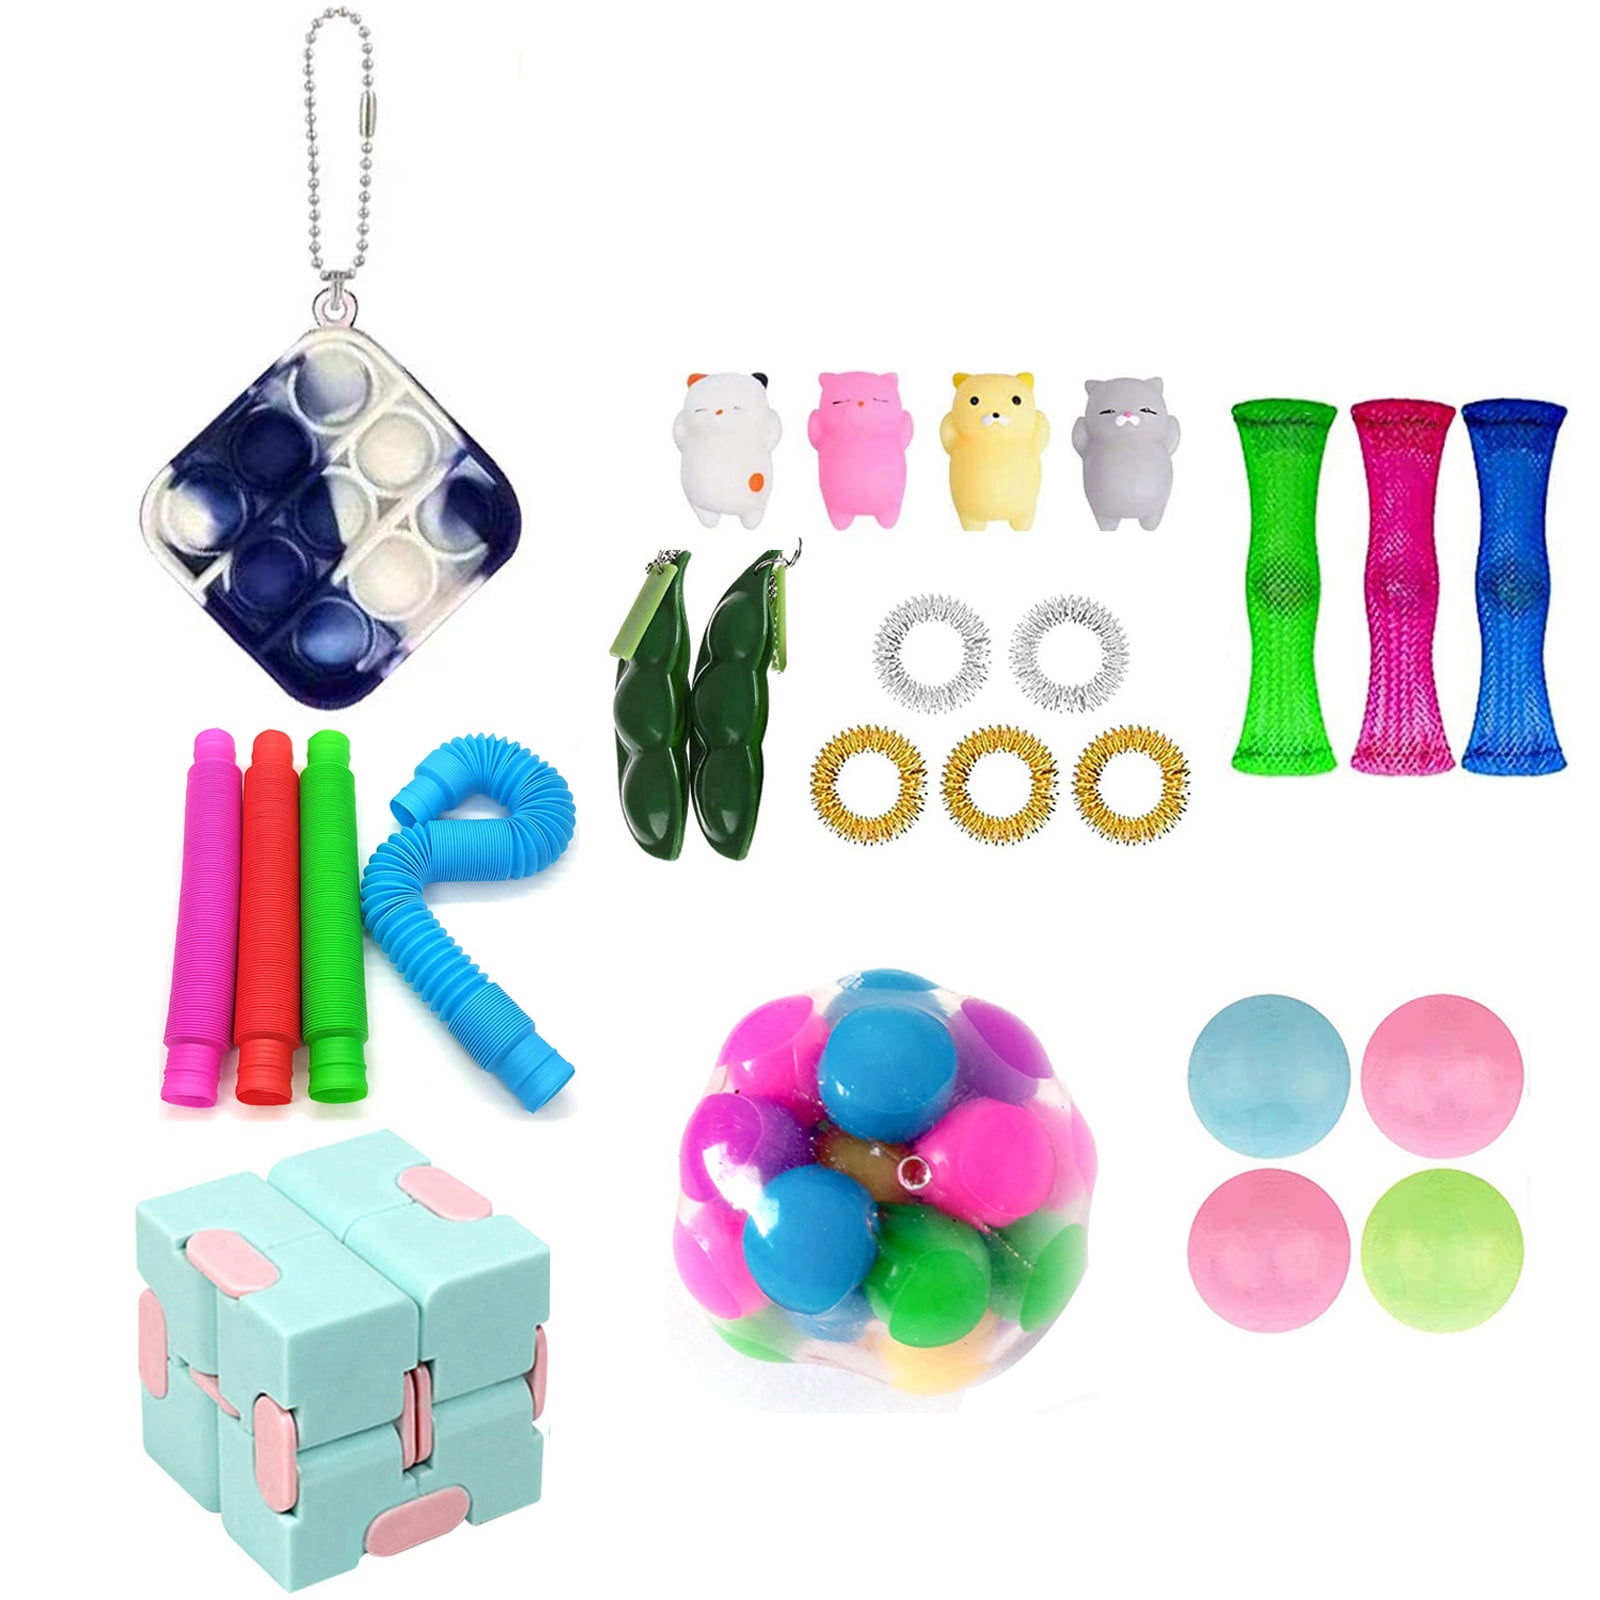 Details about   Simple Dimple Fidget Toys Anti Stress Toy Stress Relief Autism Sensory Keychain 